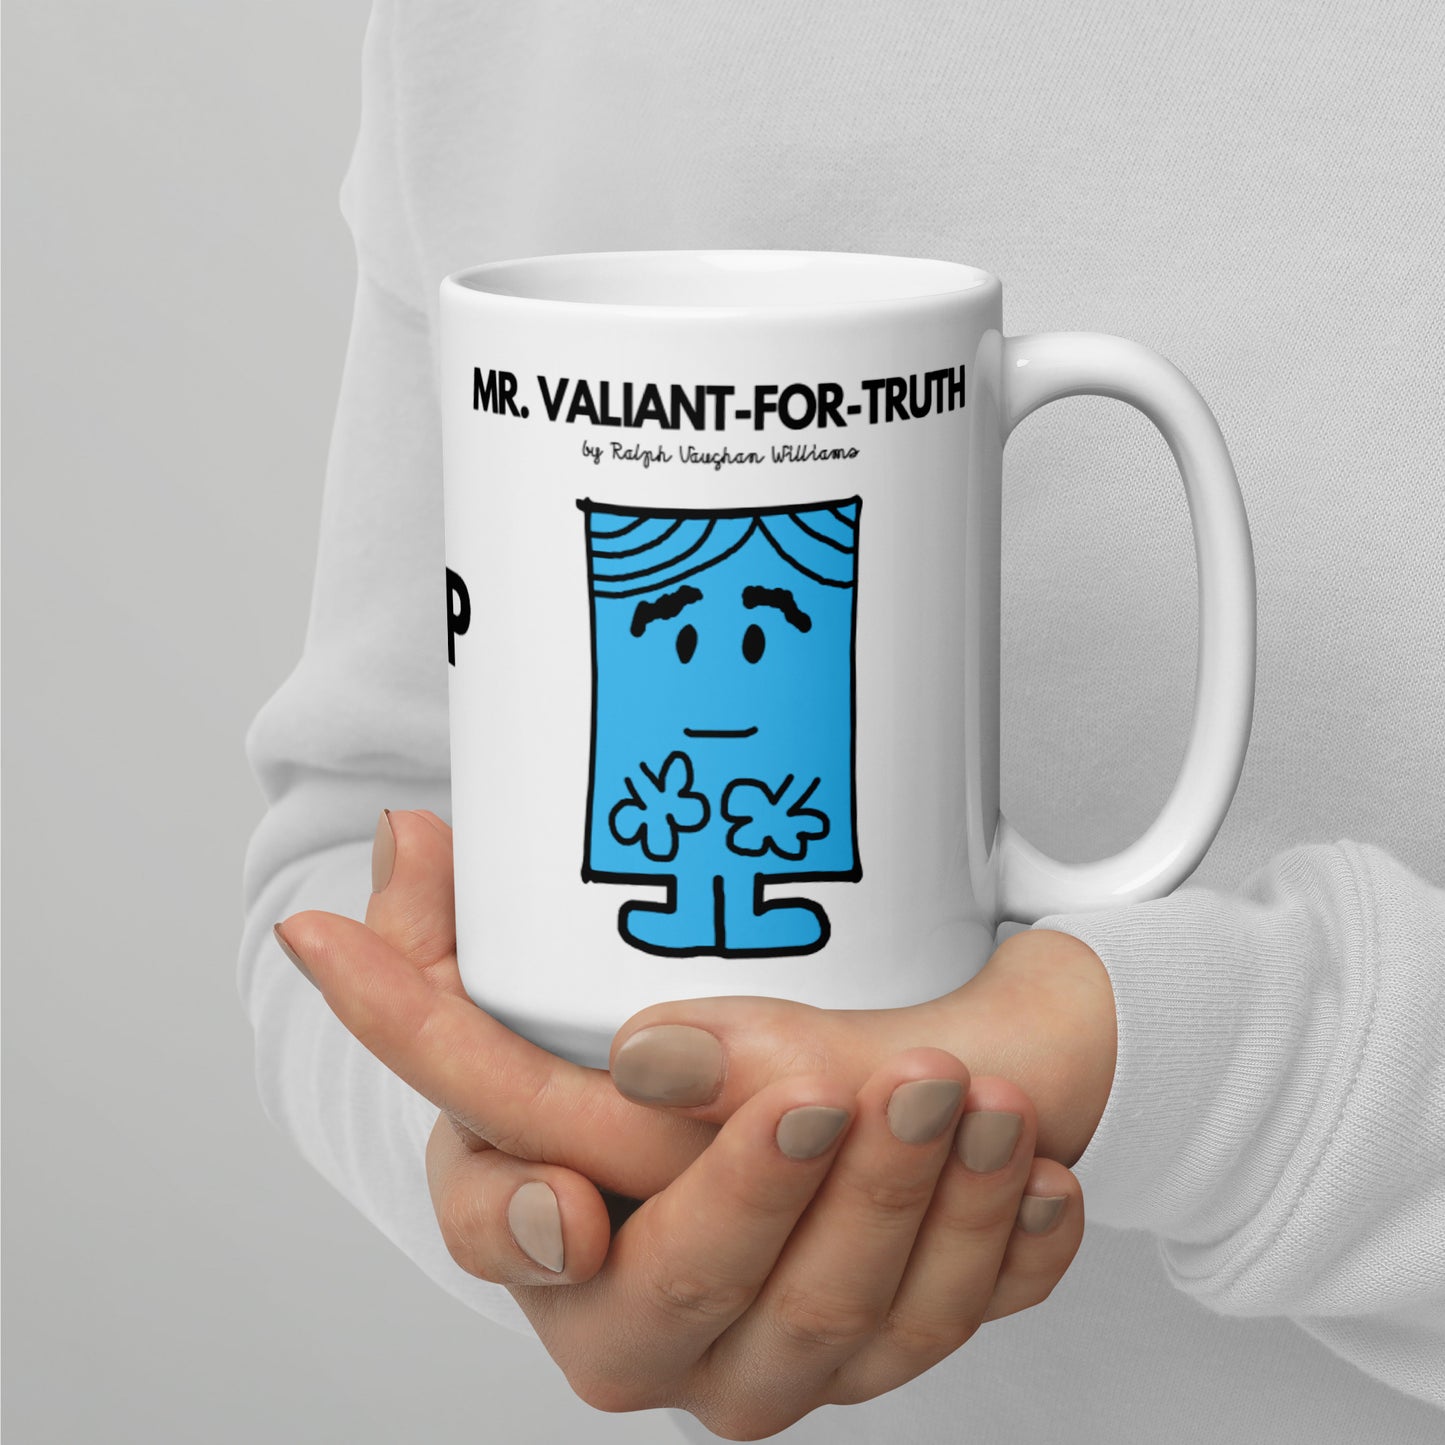 Mr. Valiant-for-Truth Mug